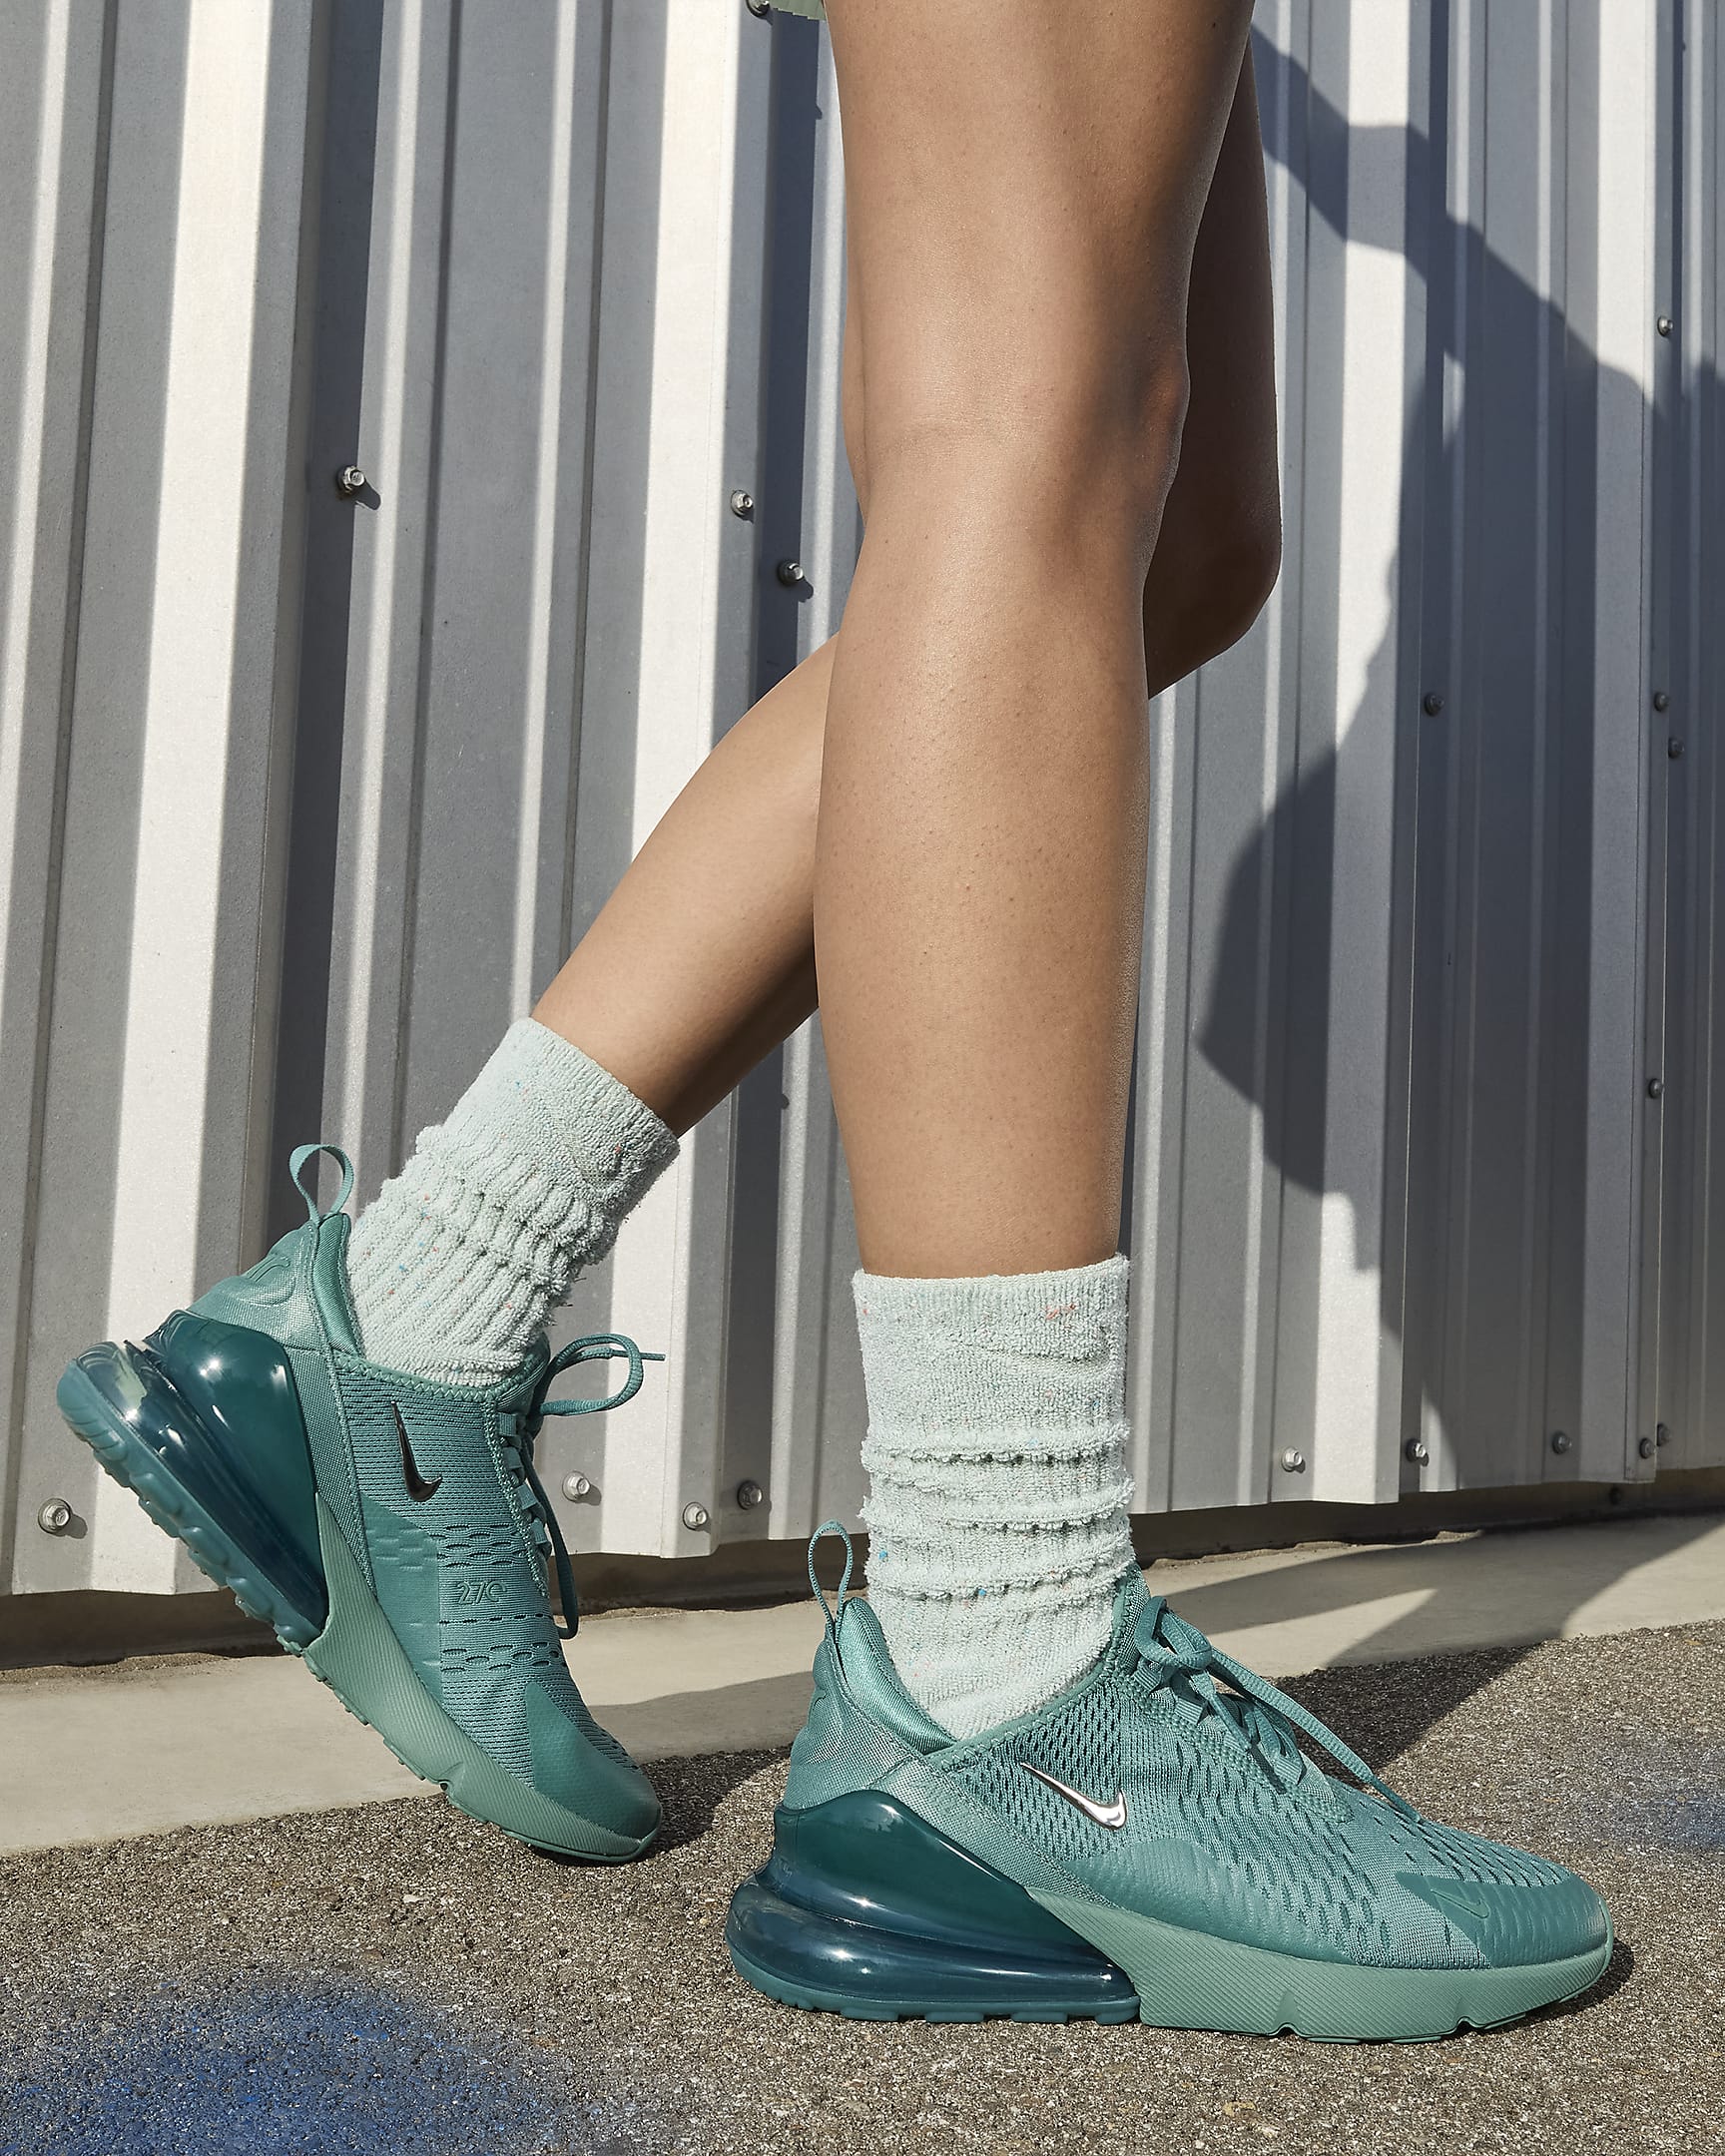 Nike Air Max 270 Women's Shoes - Bicoastal/Metallic Silver/Chrome